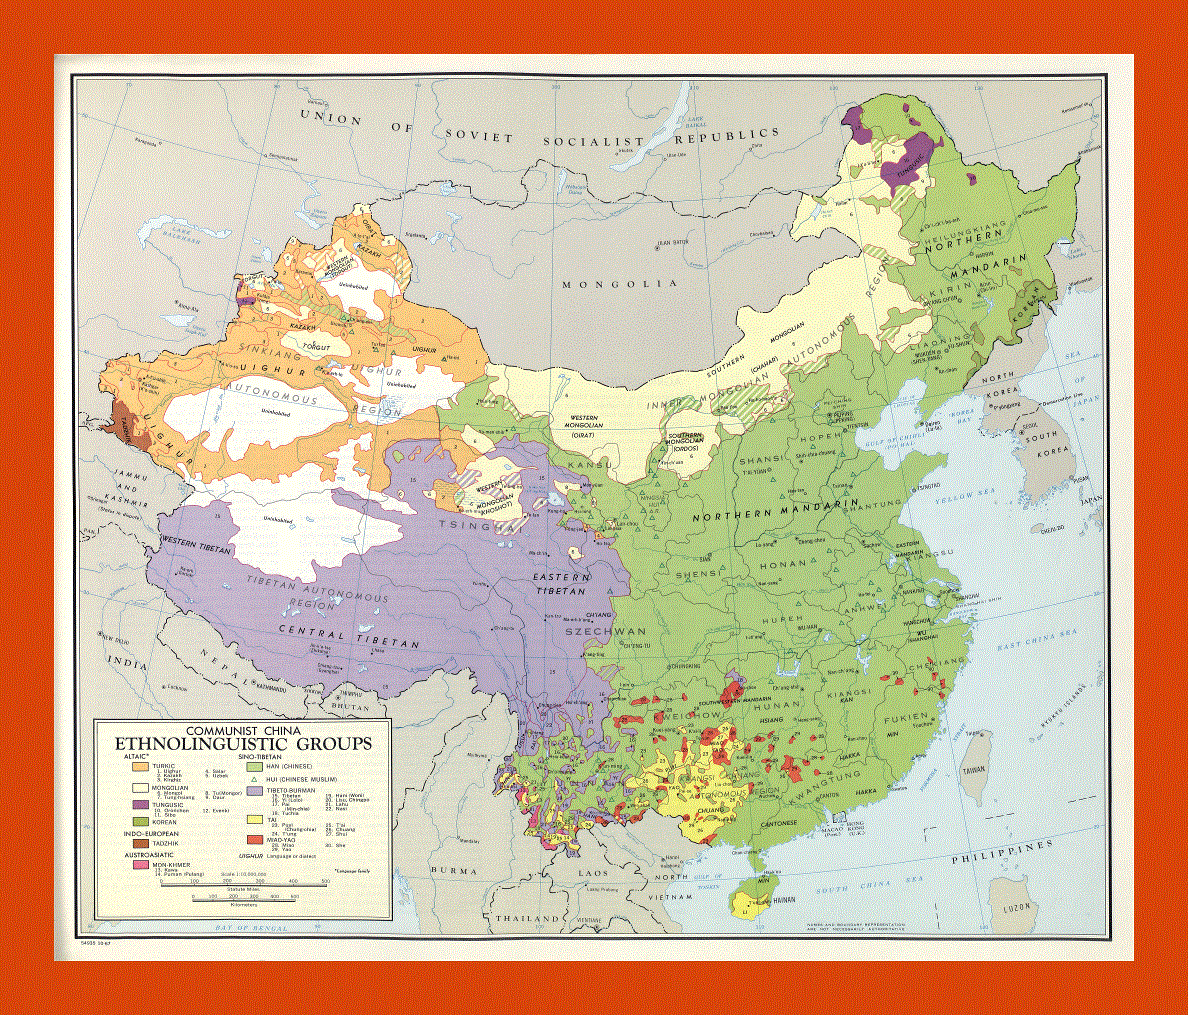 Ethnolinguistic groups map of Communist China - 1967